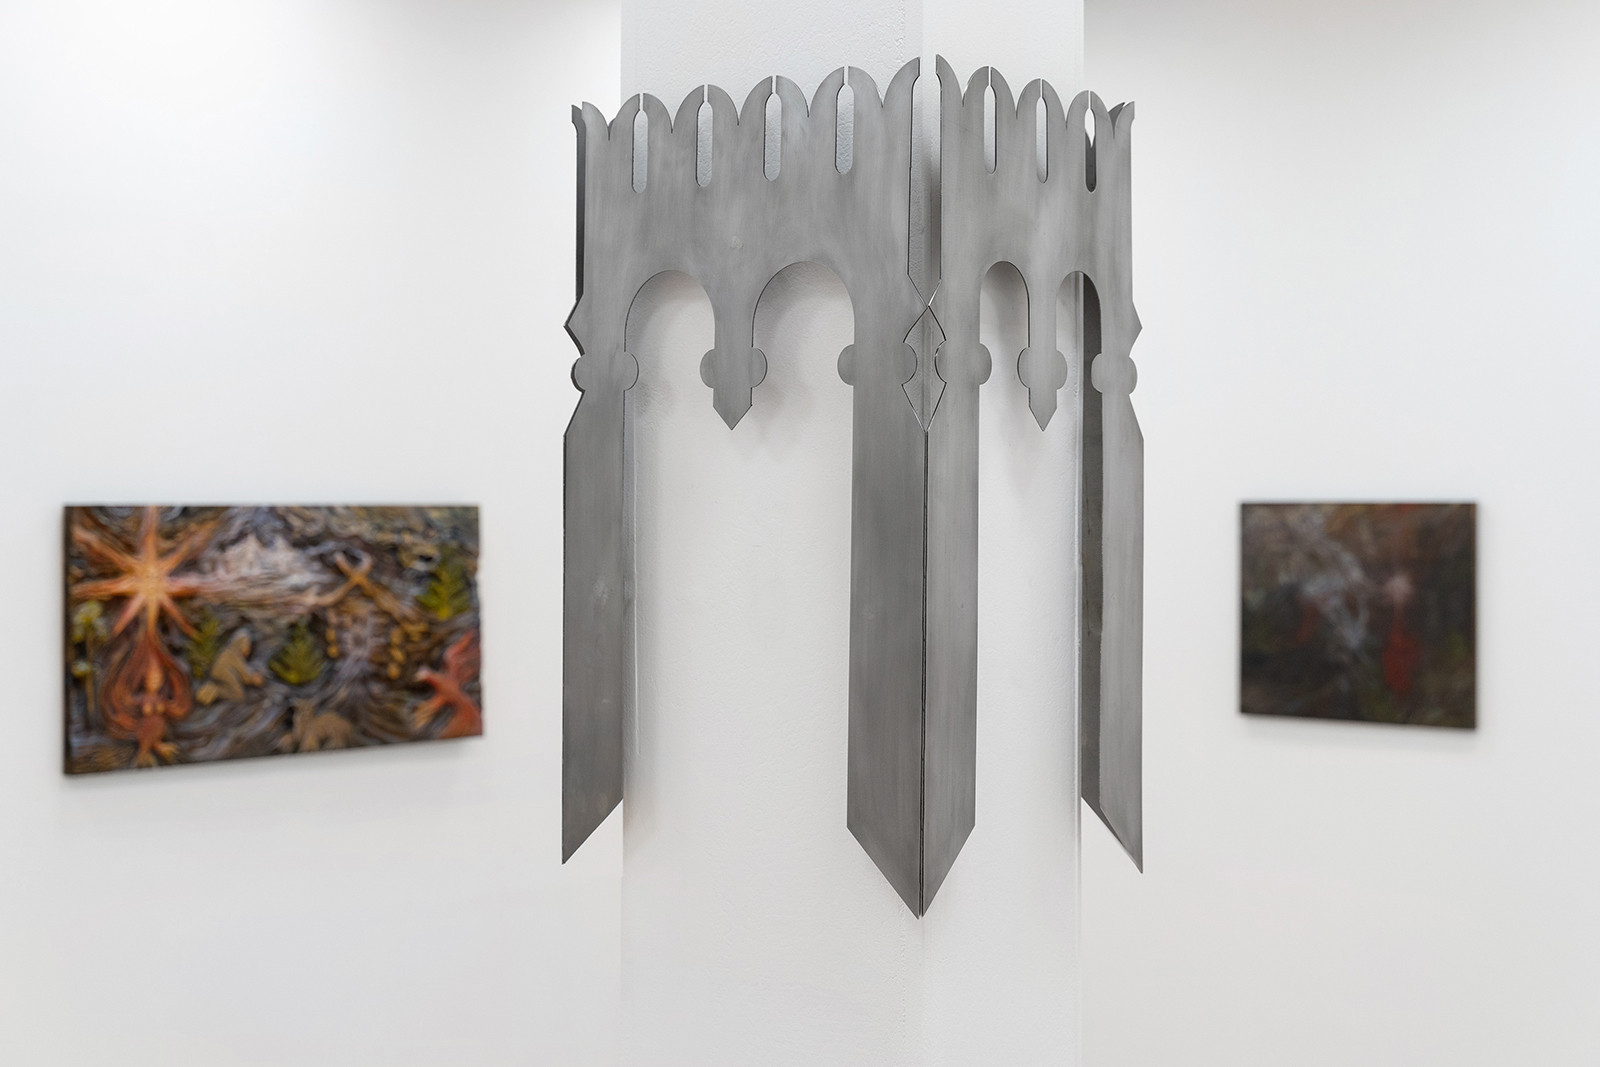 Даша Кузнецова, Жєлѣзо, 2021. Сталь. Выставка «Кита», Fragment Gallery, 2021, Москва.